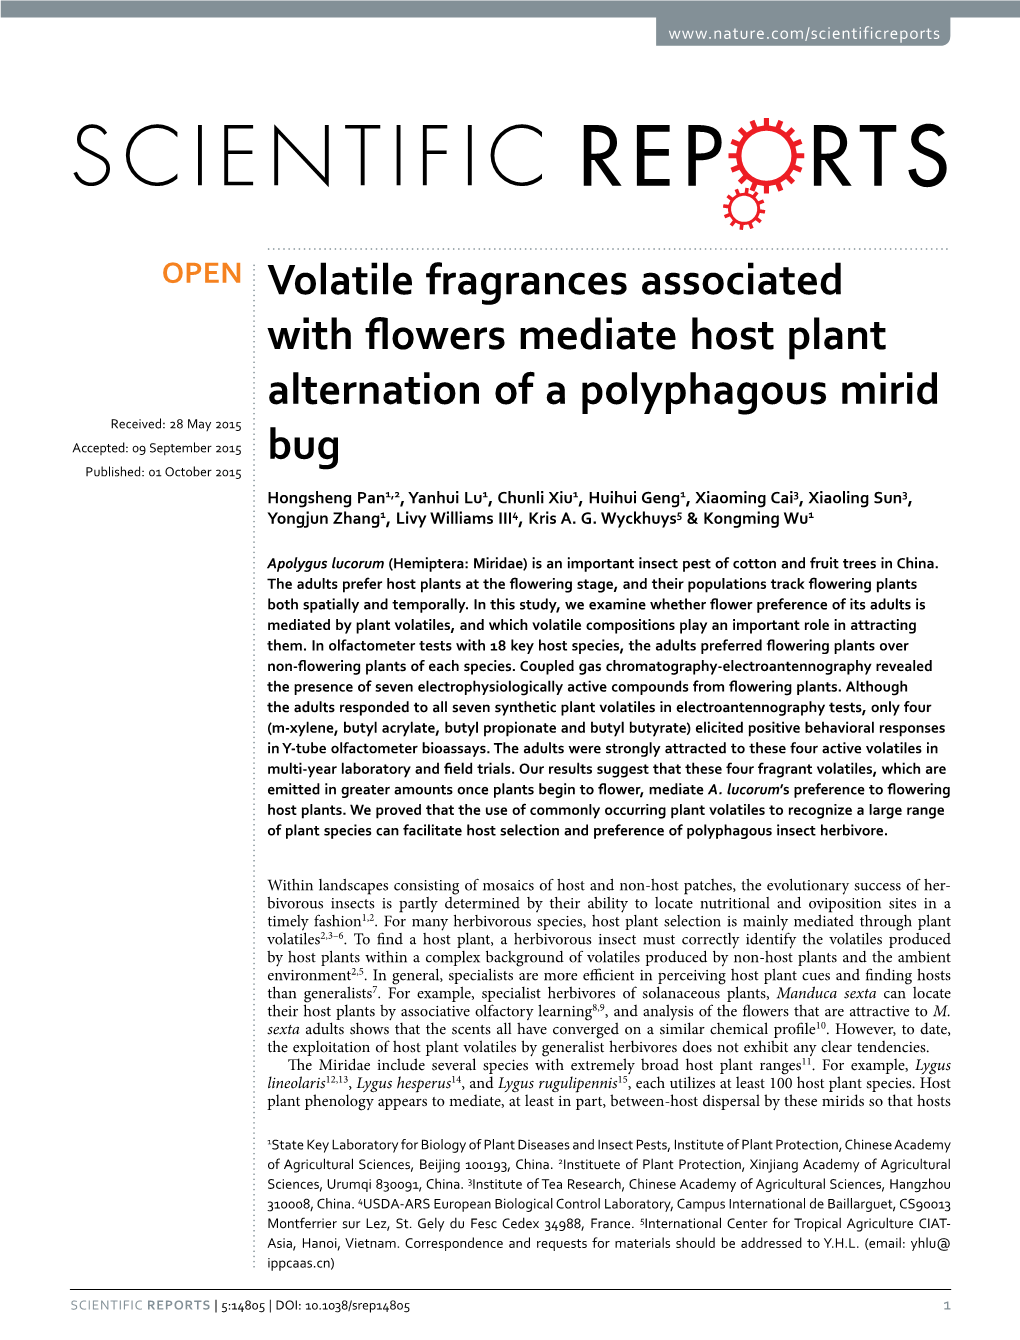 Volatile Fragrances Associated with Flowers Mediate Host Plant Alternation of a Polyphagous Mirid